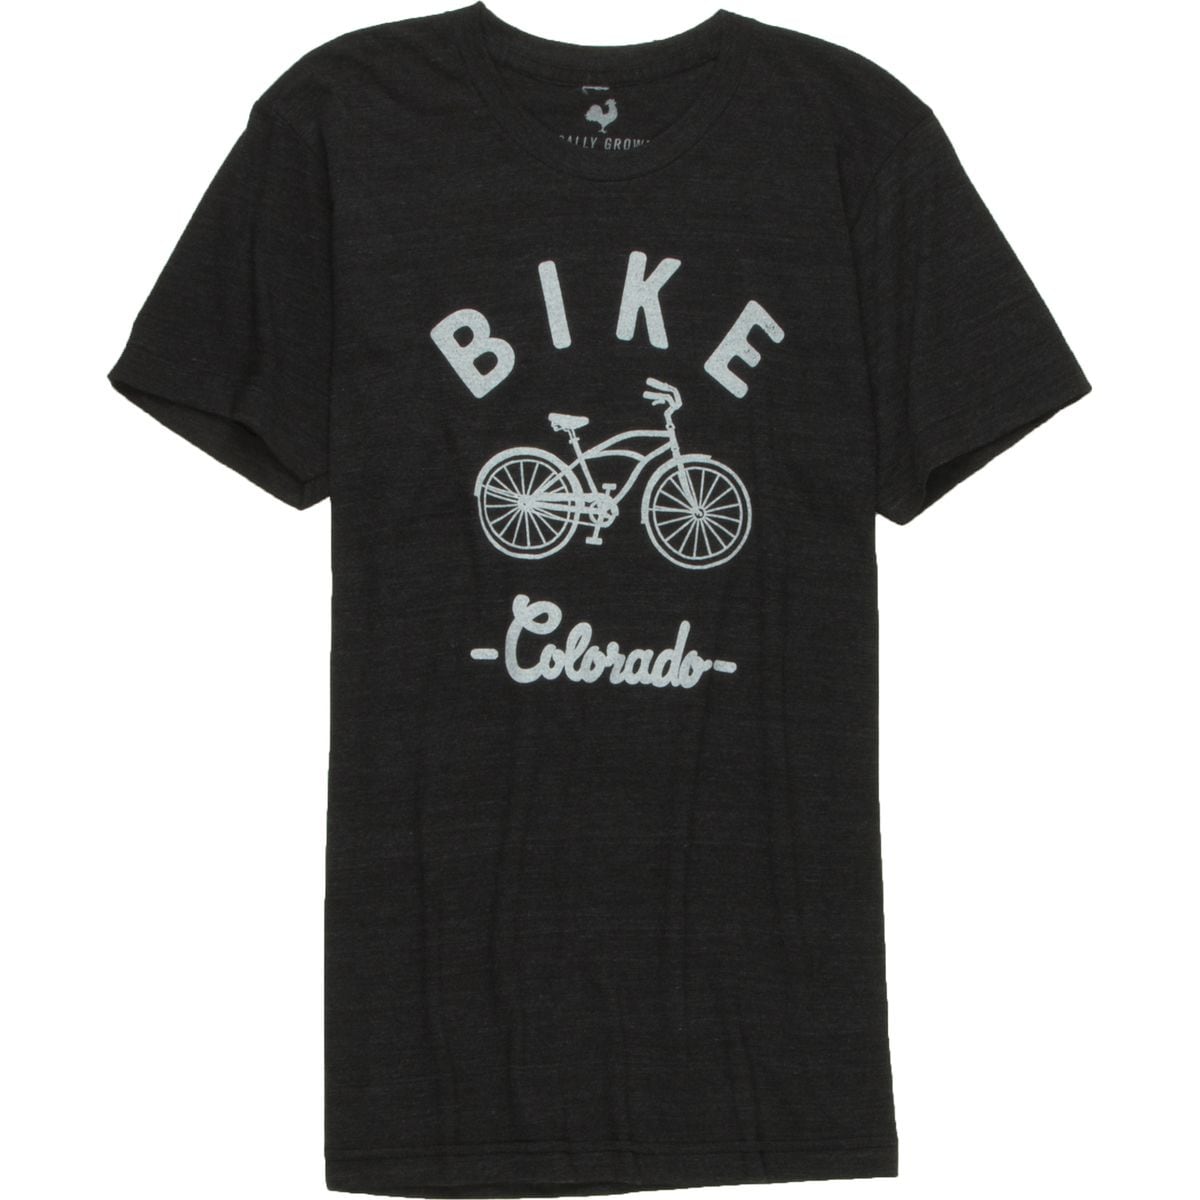 Locally Grown Bike Cruiser Colorado Tri-Blend Vintage T-Shirt - Short-Sleeve - Men's Vintage Black/White, XXL